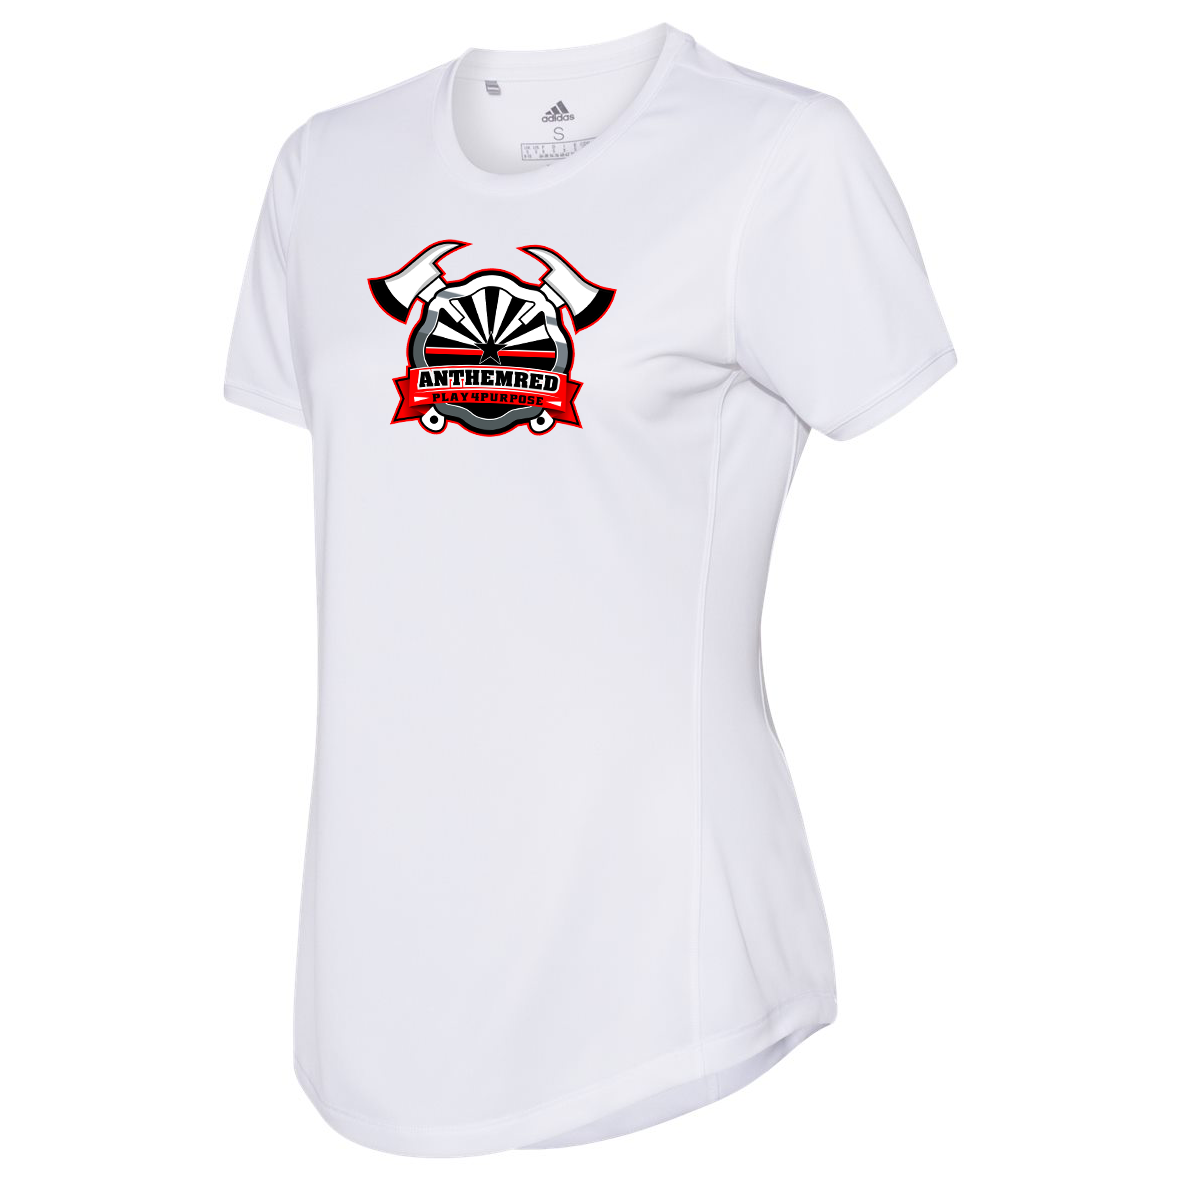 Anthem Red Softball Women's Adidas Sport T-Shirt